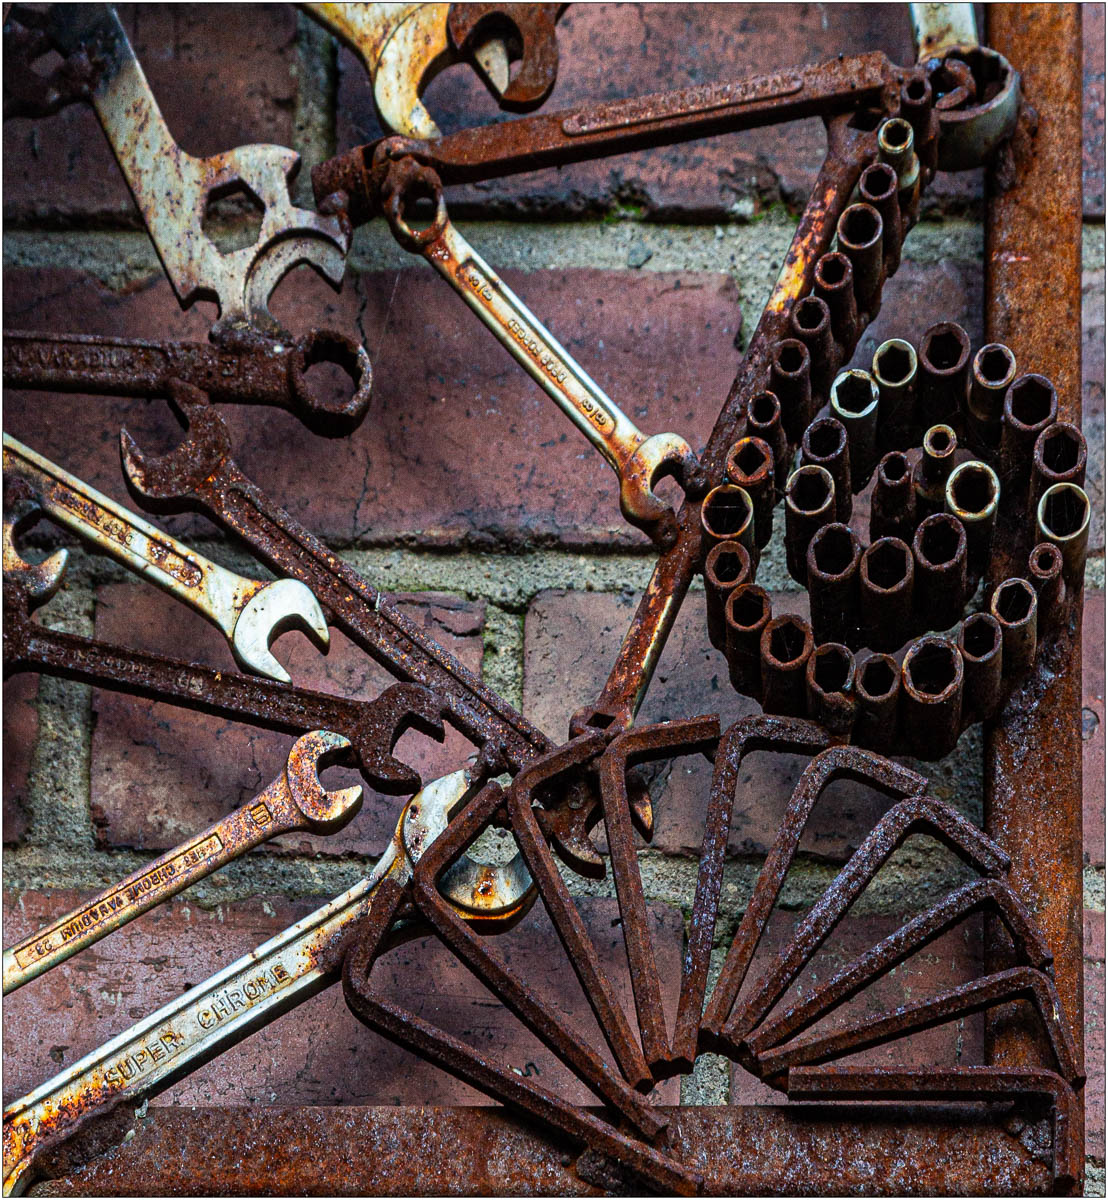 Rusty tools, Roger Poyser